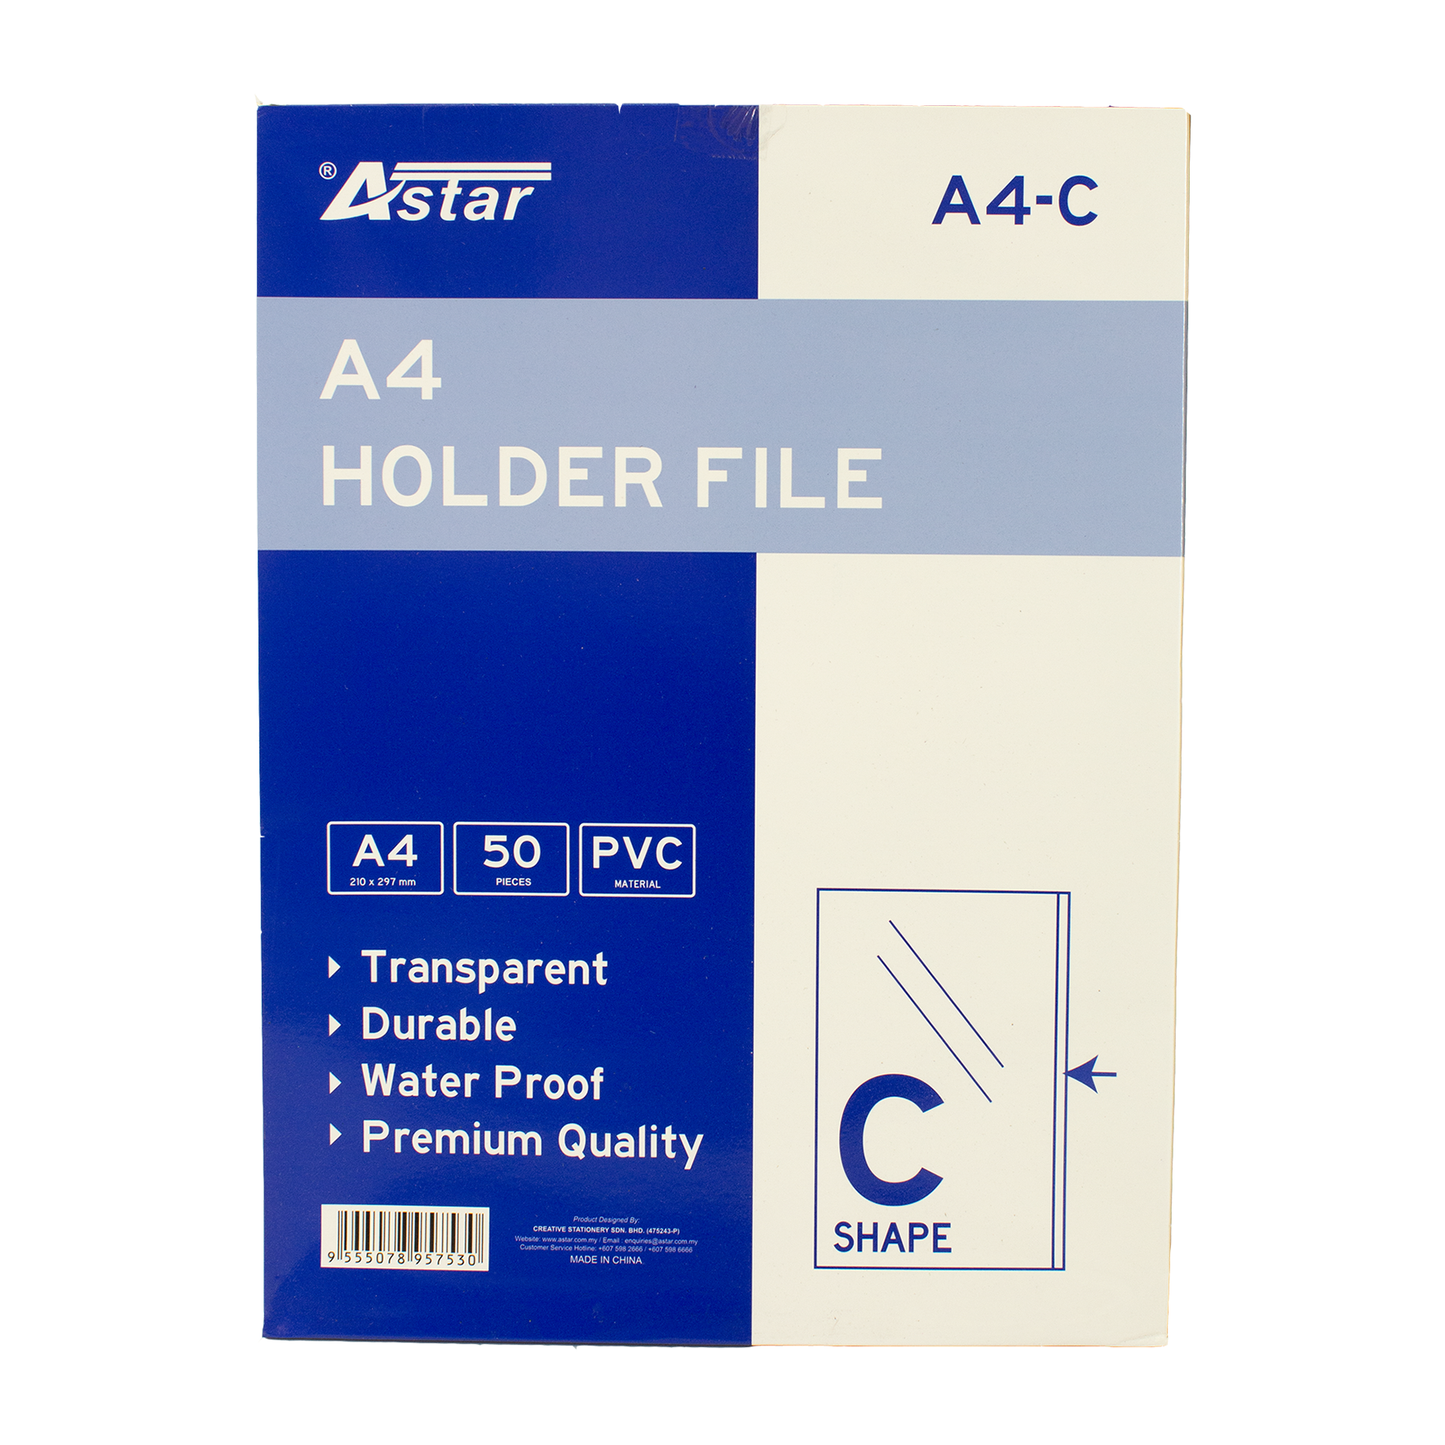 A4-C - ASTAR PVC SHEET FOLDER FILE